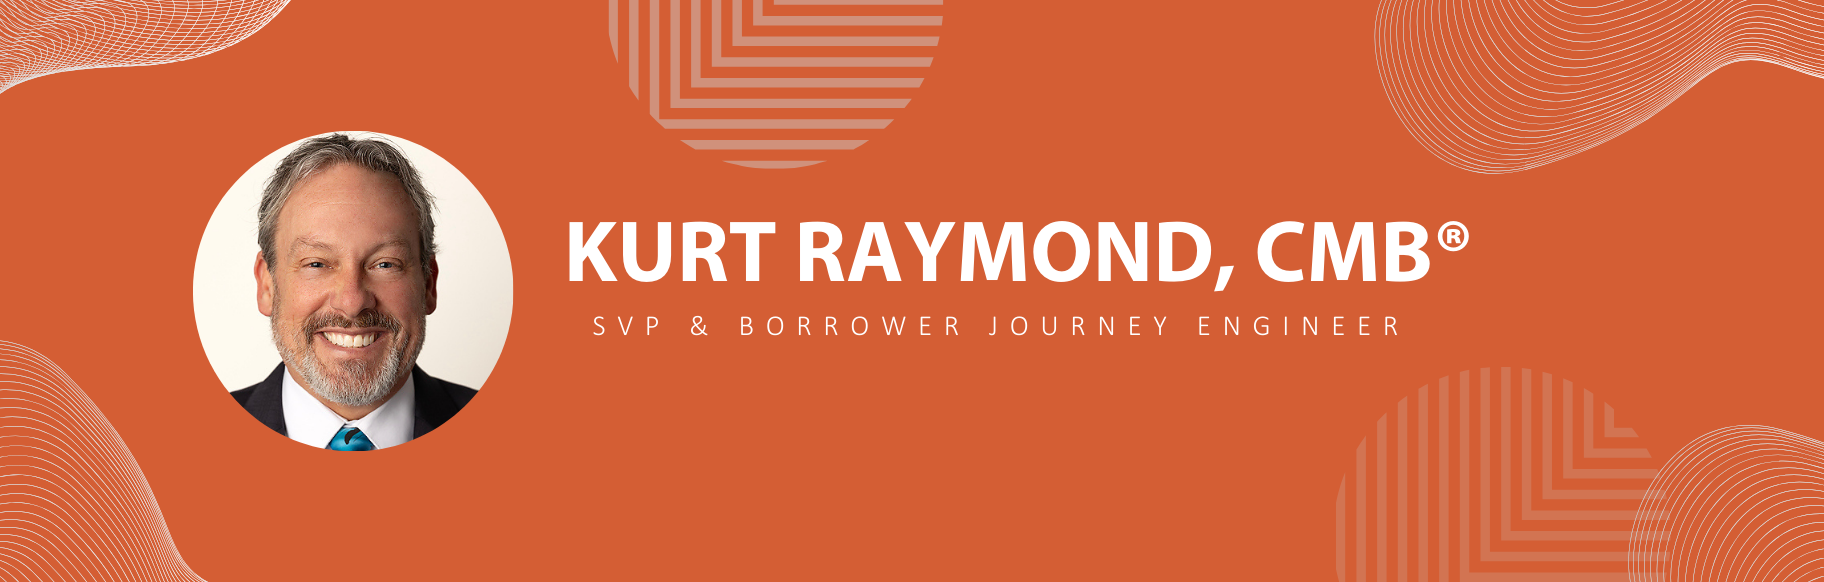 Informative Research Adds Mortgage Finance Expert Kurt Raymond, CMB as Senior Vice President